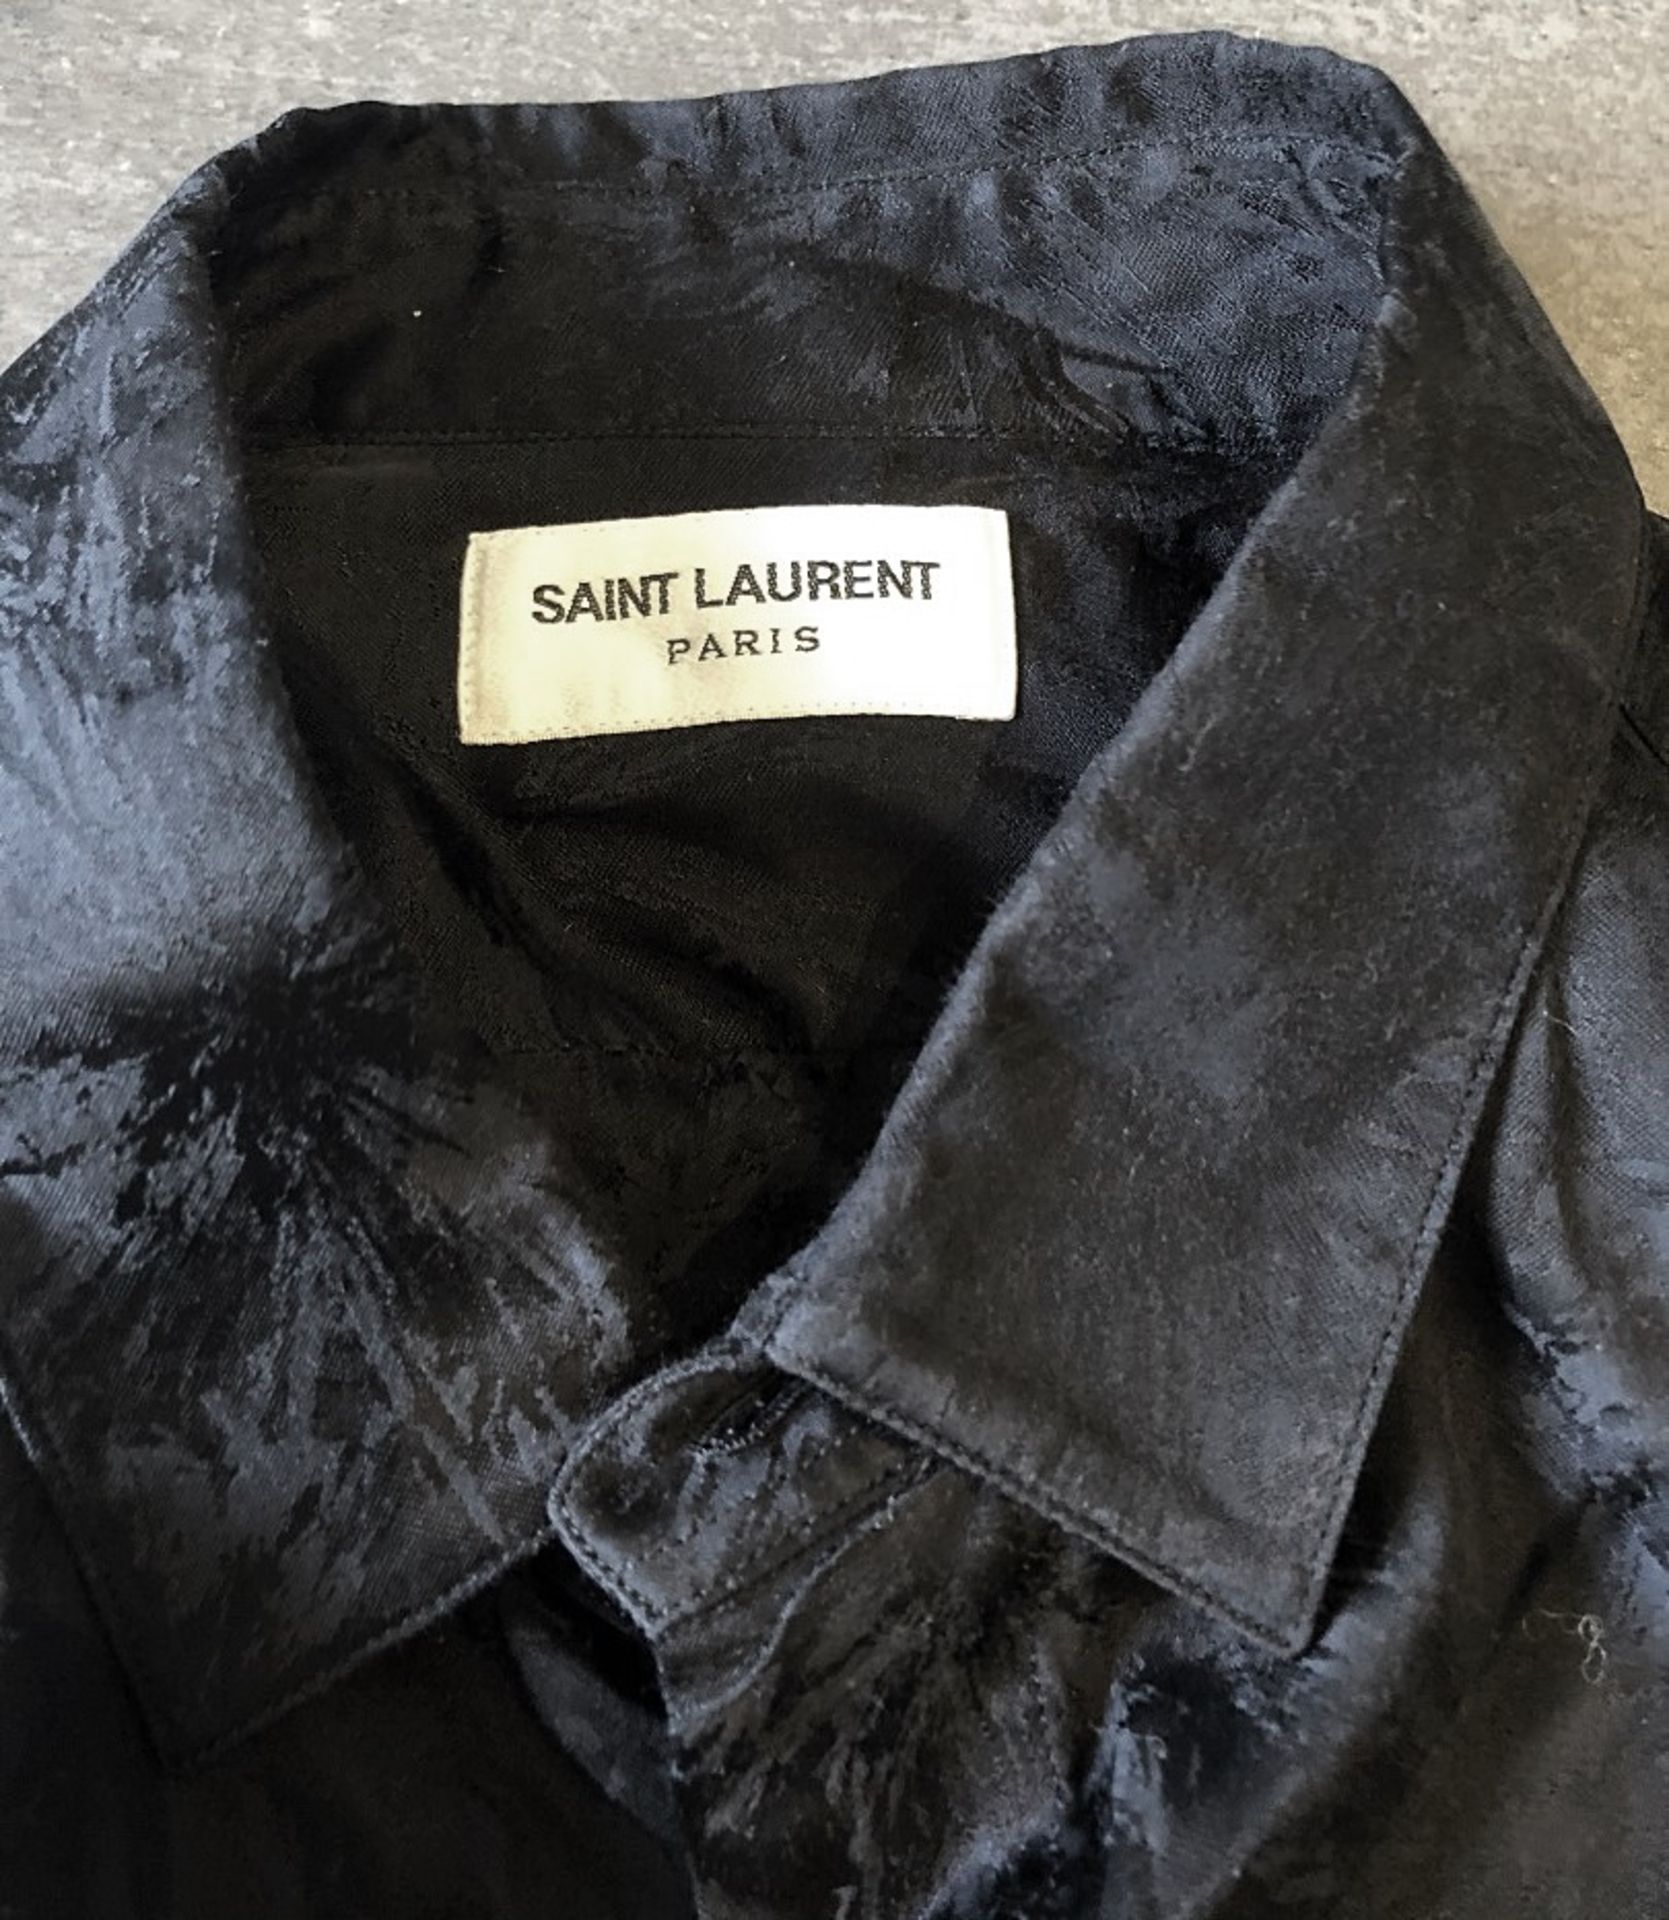 1 x Men's Genuine Saint Laurent Designer Long Sleeve Shirt In Black - Preowned - Original RRP £380 - Image 5 of 7